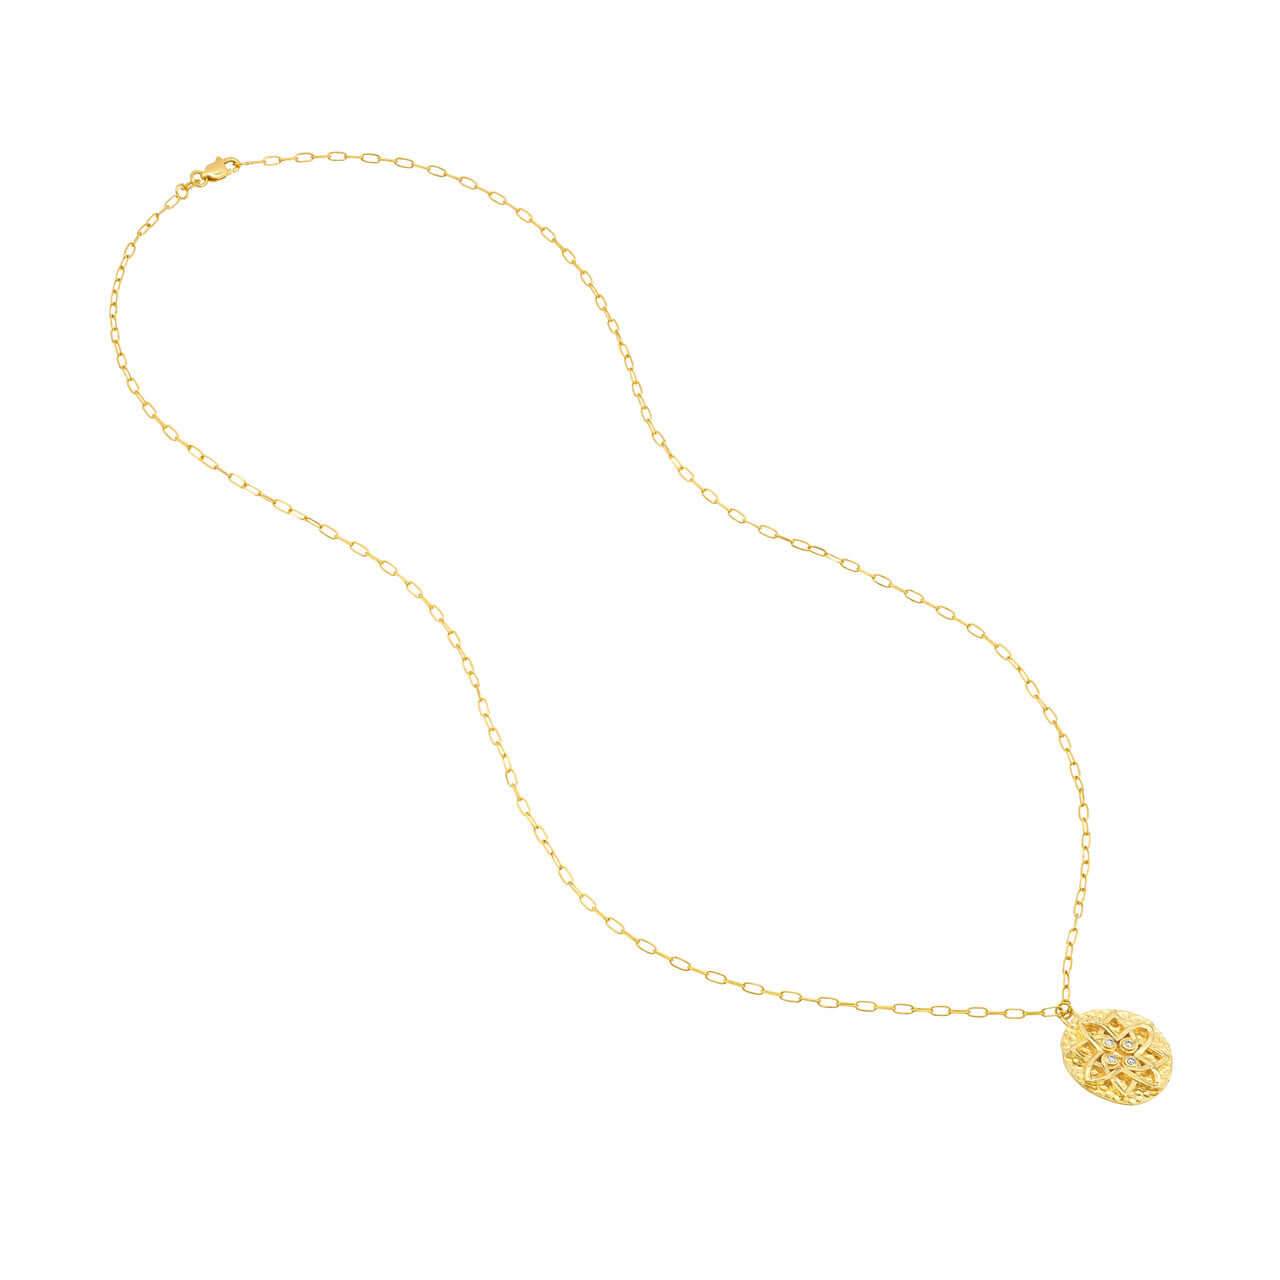 Gold Hammered Floral Medallion Diamond Necklace | Lisa Robin